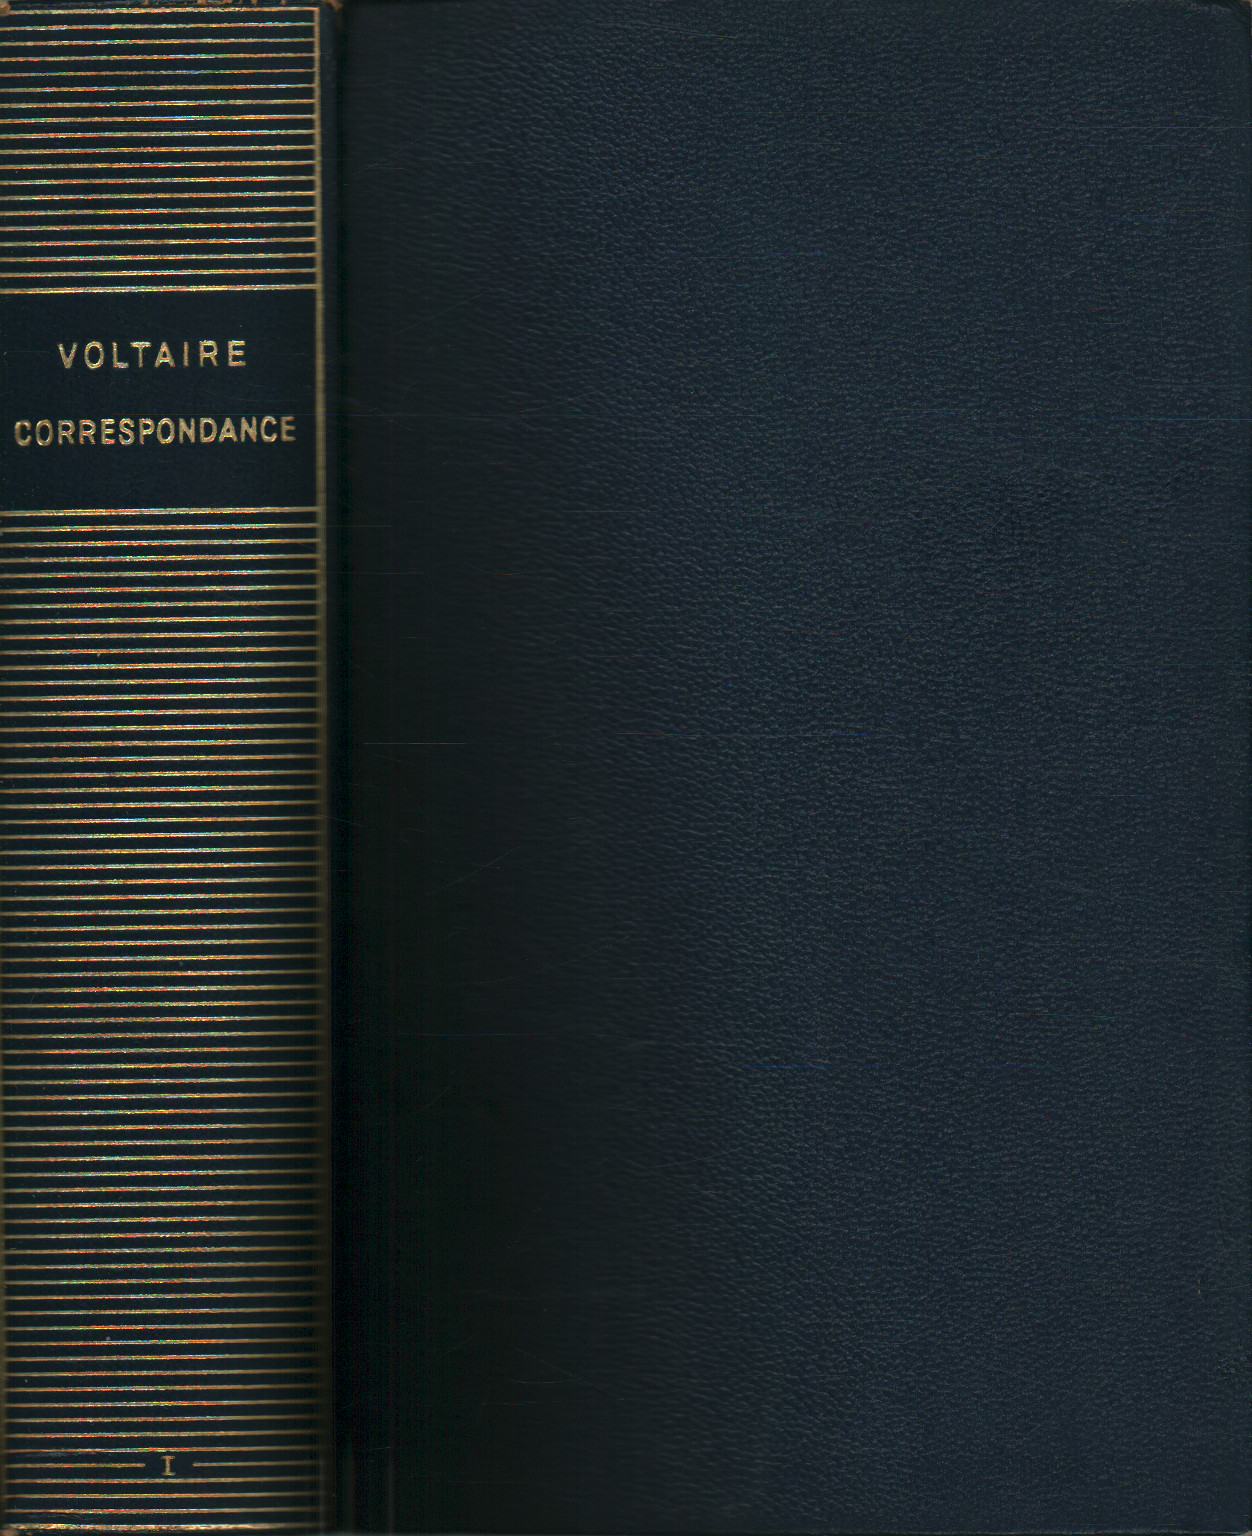 Correspondence de Voltaire (volume I), s.a.